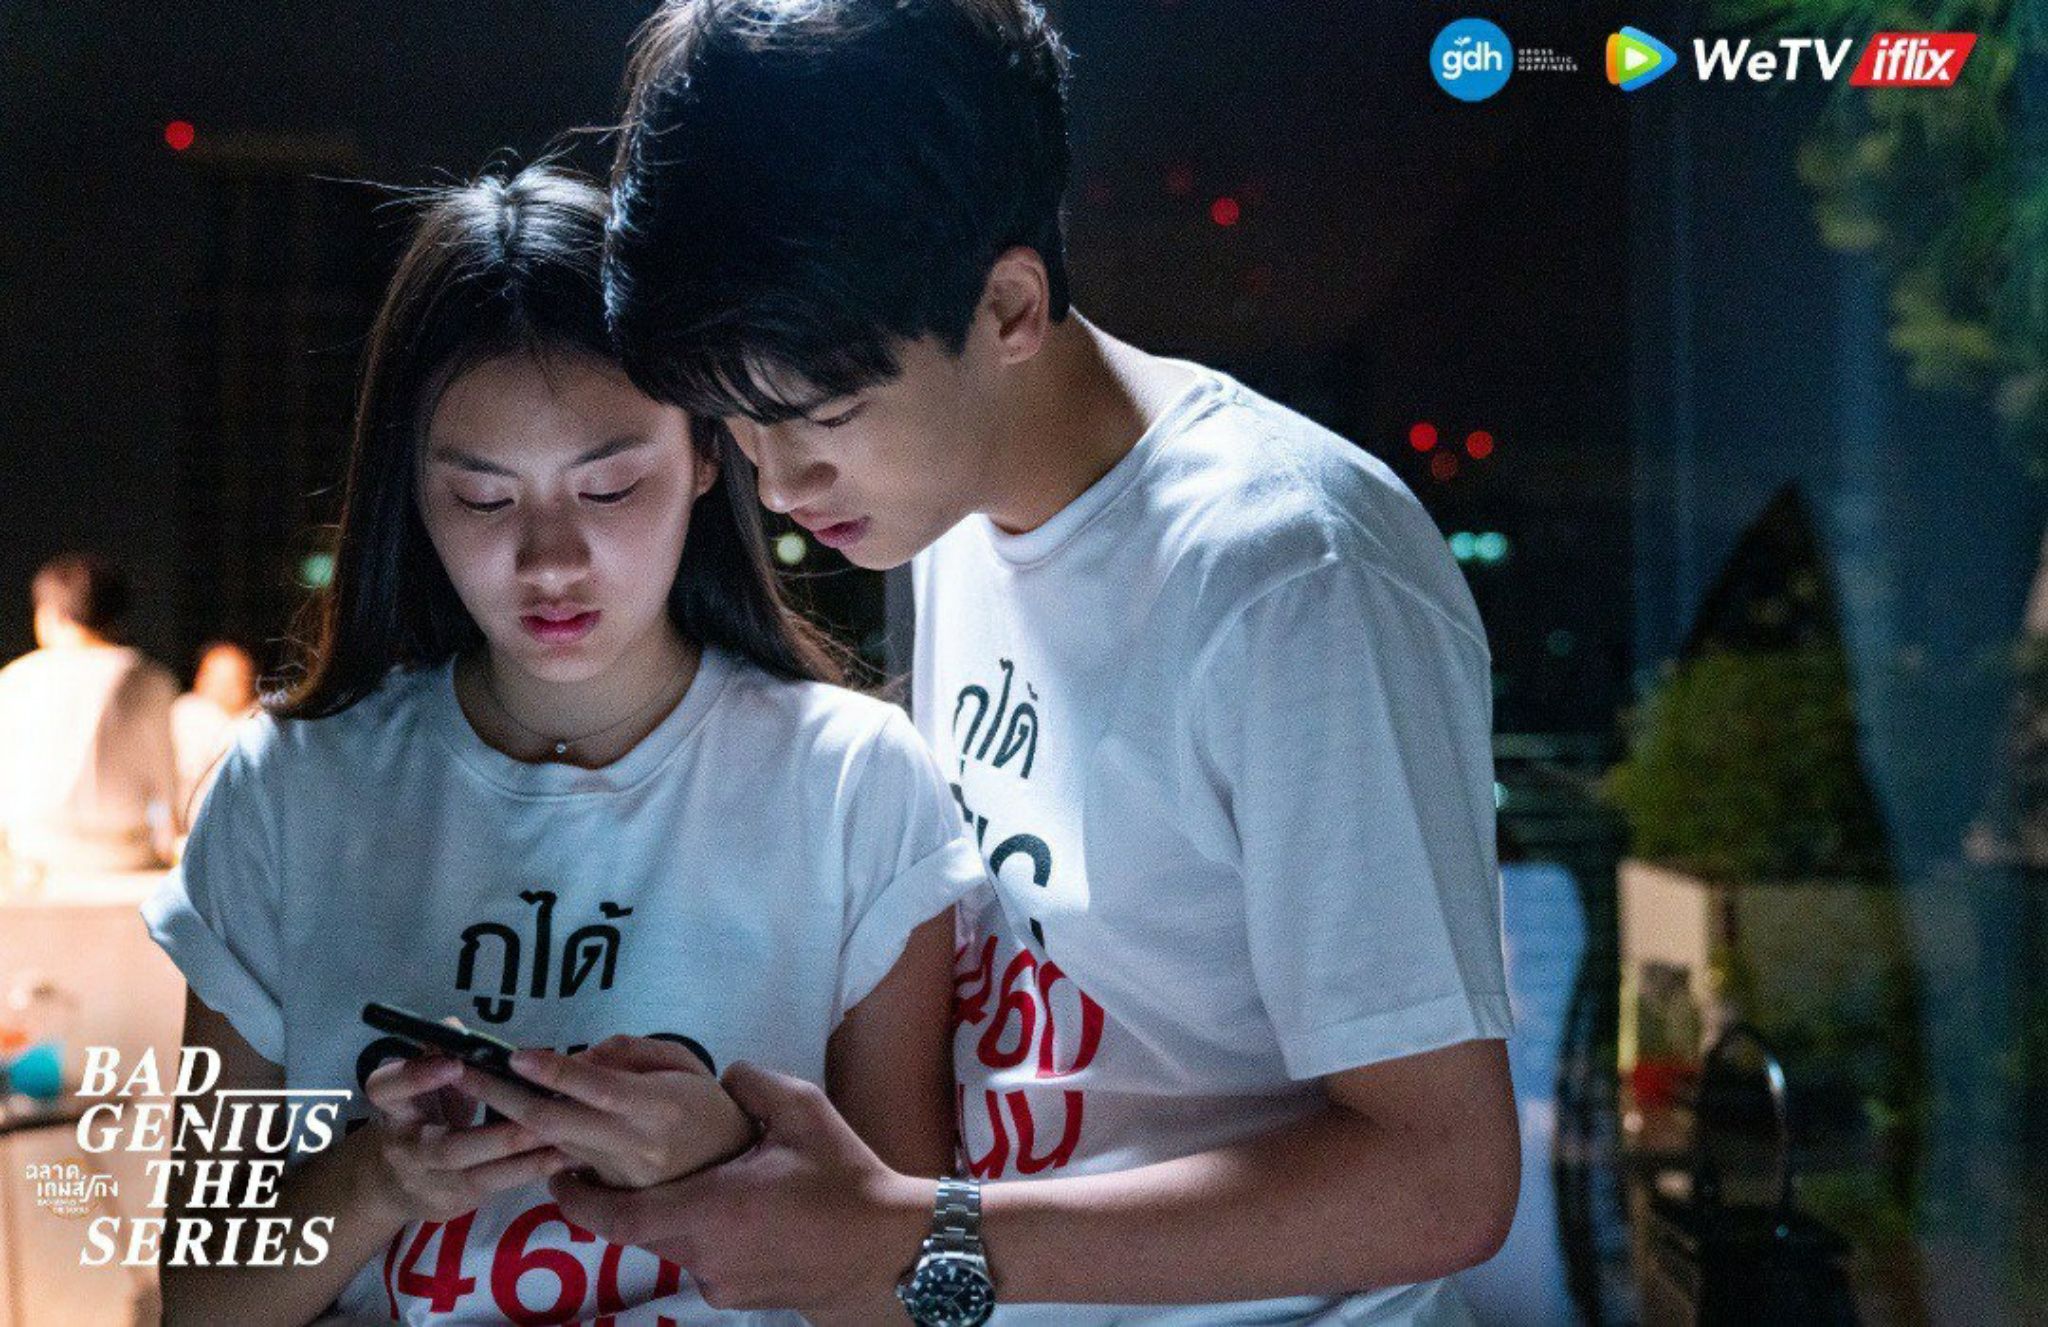 Ini Link Streaming Nonton Bad Genius The Series Episode 1 11 Drama Thailand Trending Di Twitter Zona Priangan